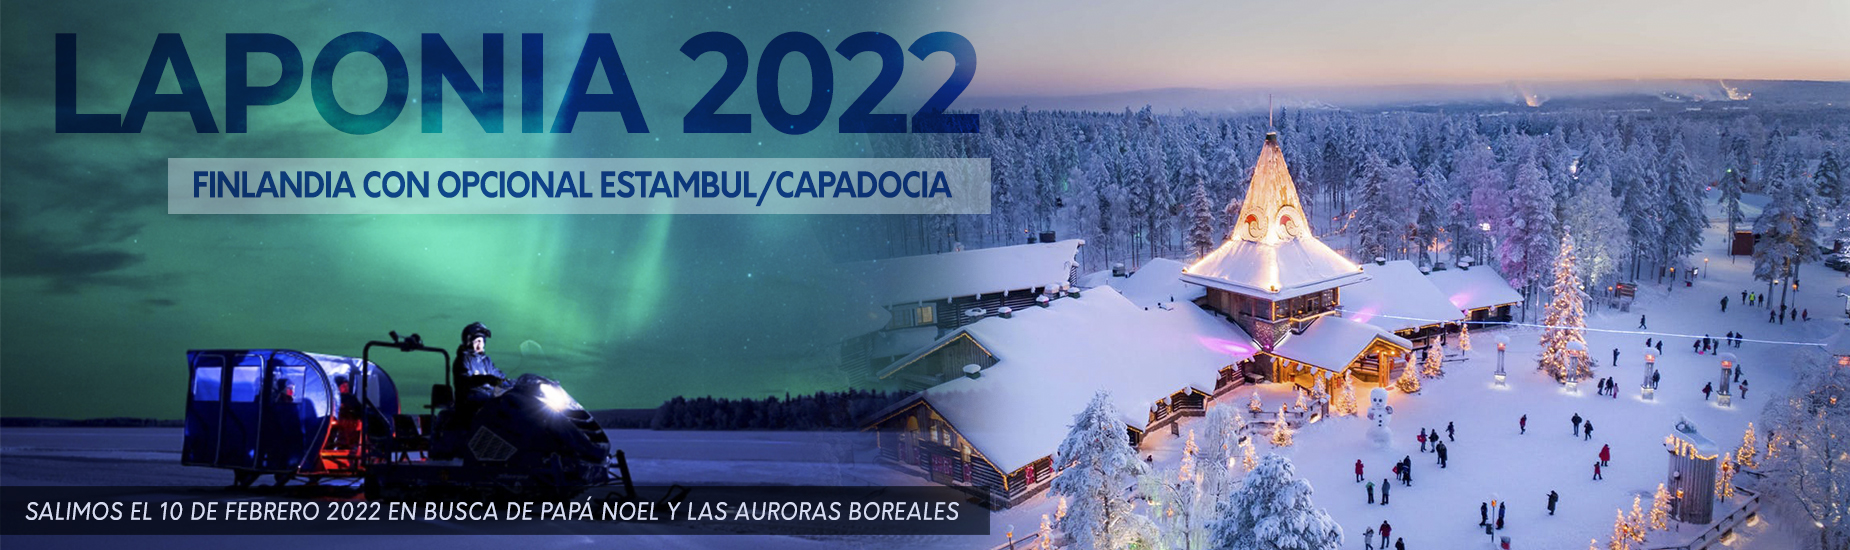 Viajes 2022 Laponia